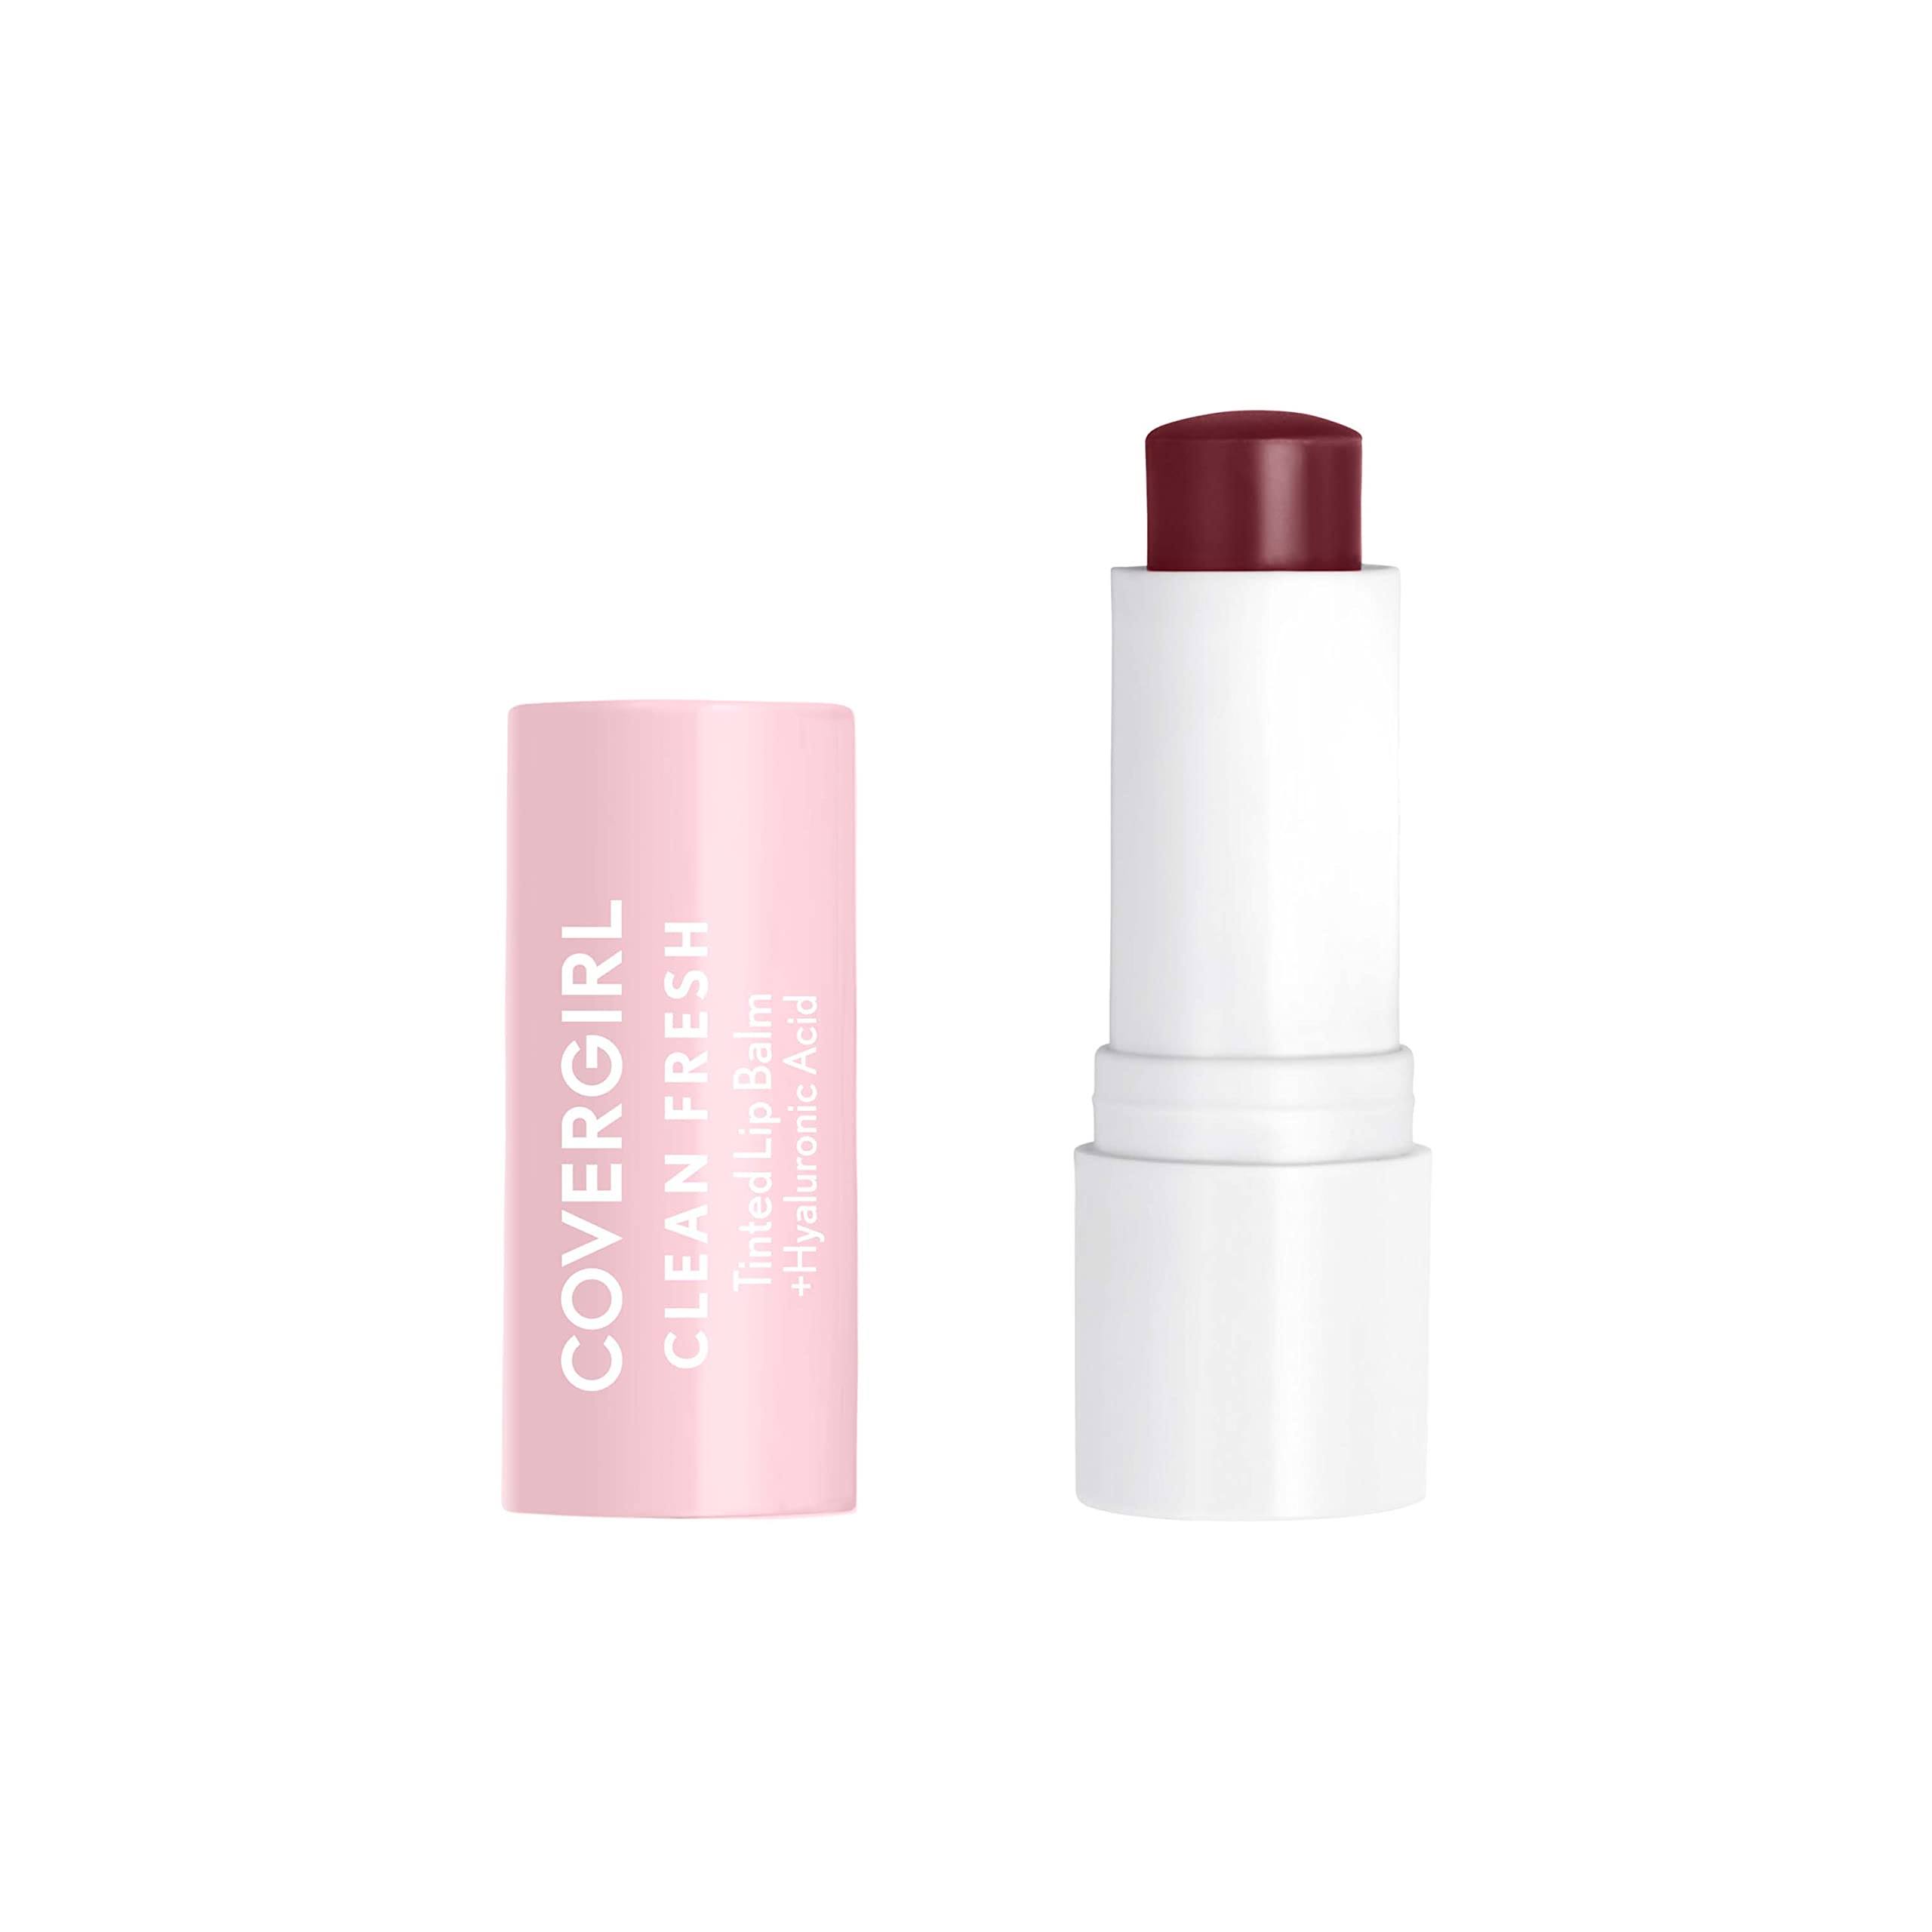 Covergirl clean fresh lip balm, bliss you berry 600, 0.05 oz